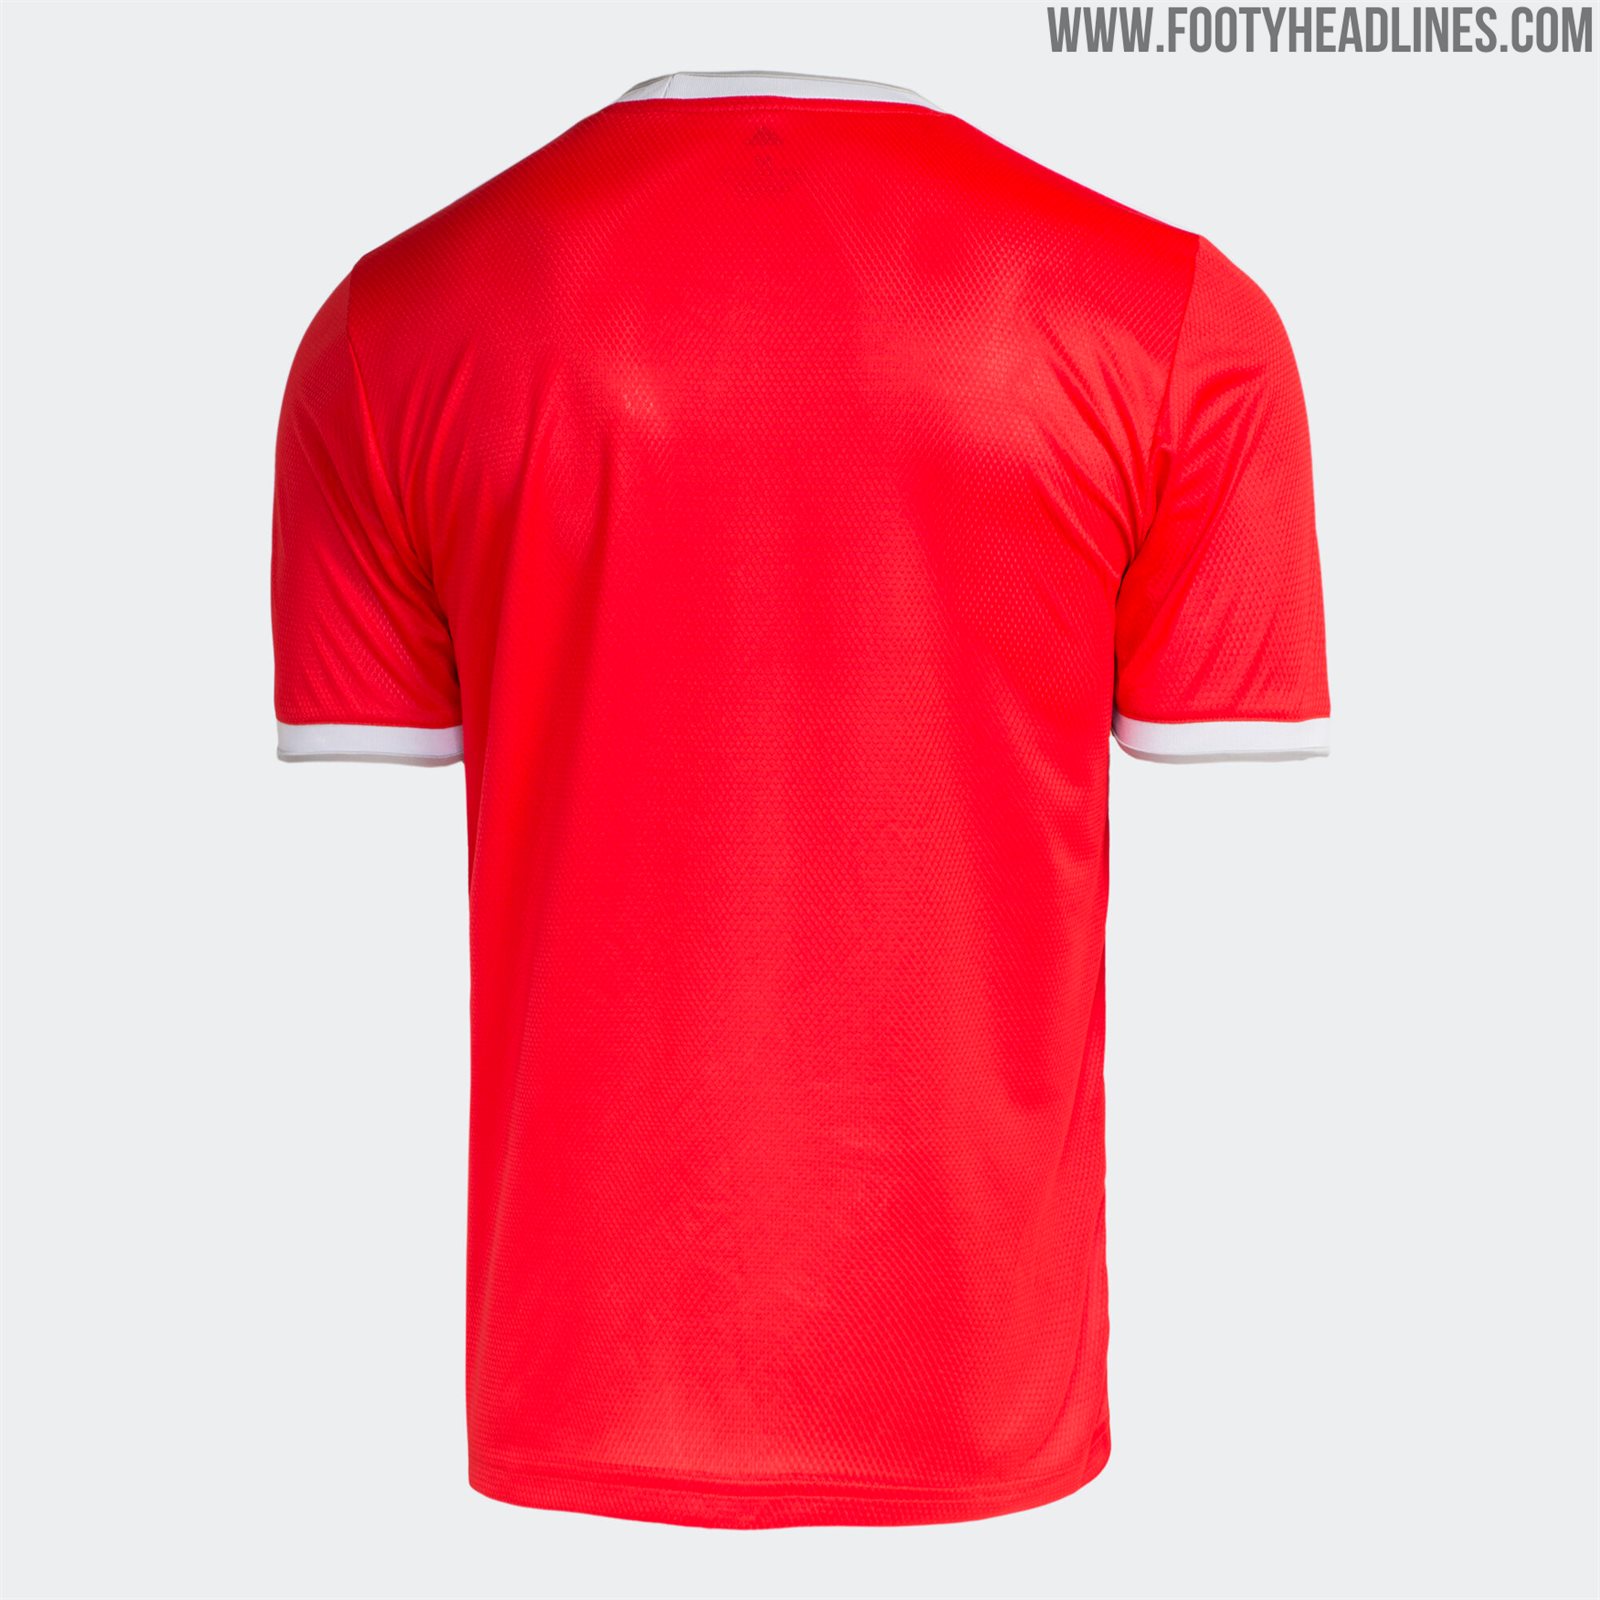 No More Nike! Adidas SC Internacional 2020 Home & Away Kits Released ...